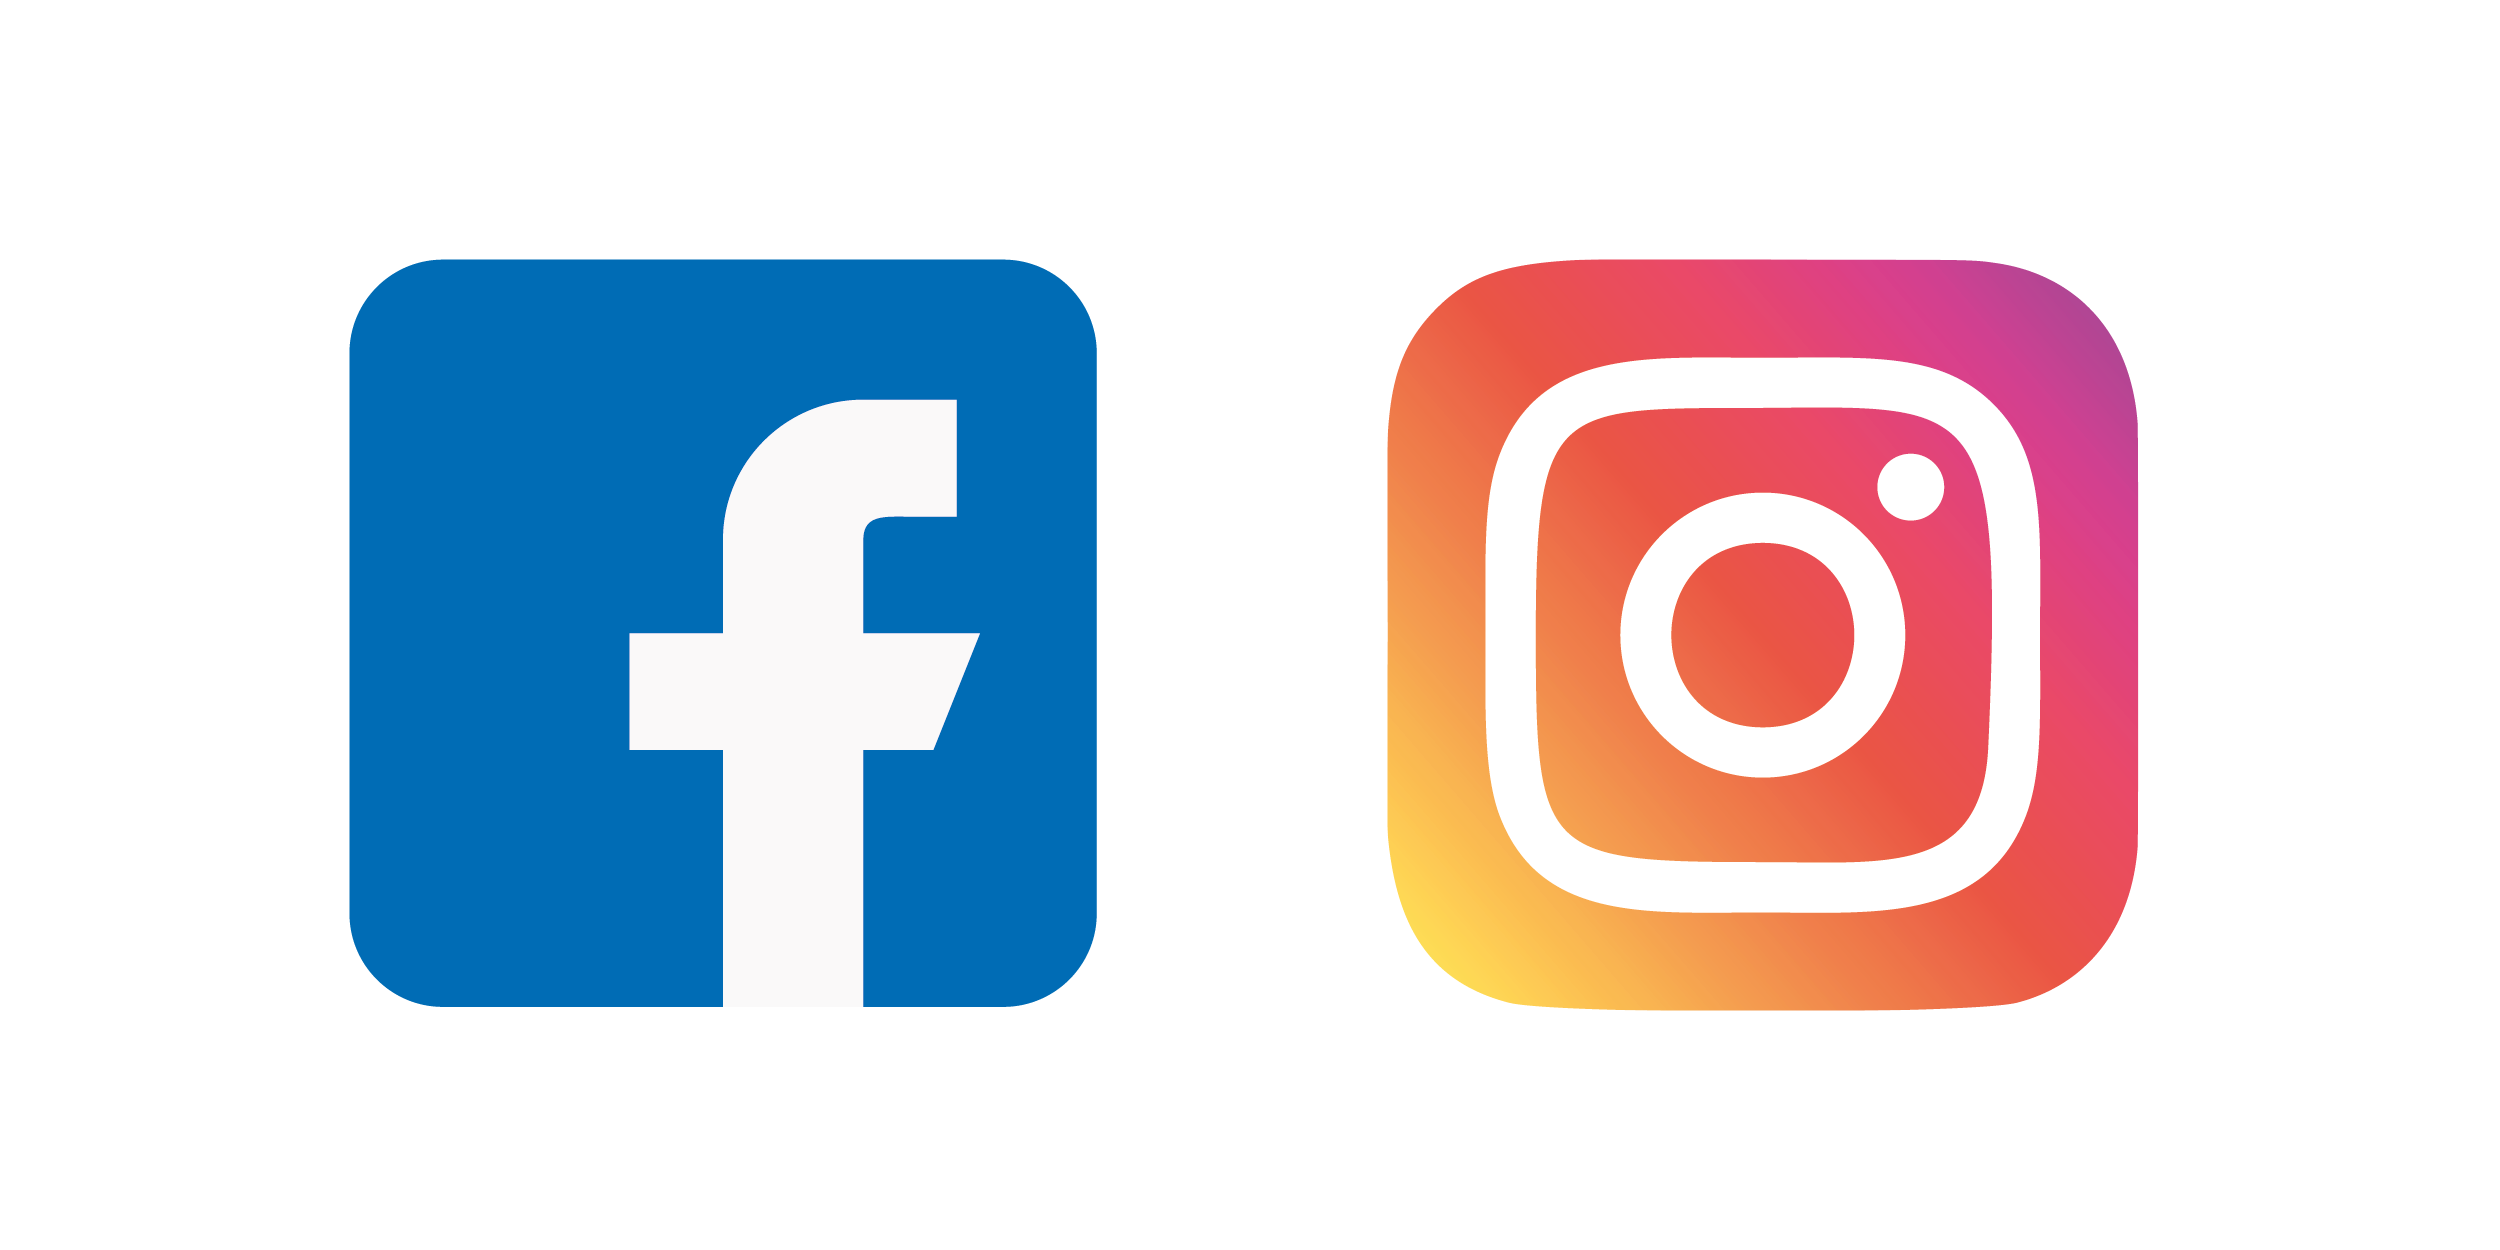 Iconen Facebook en Instagram